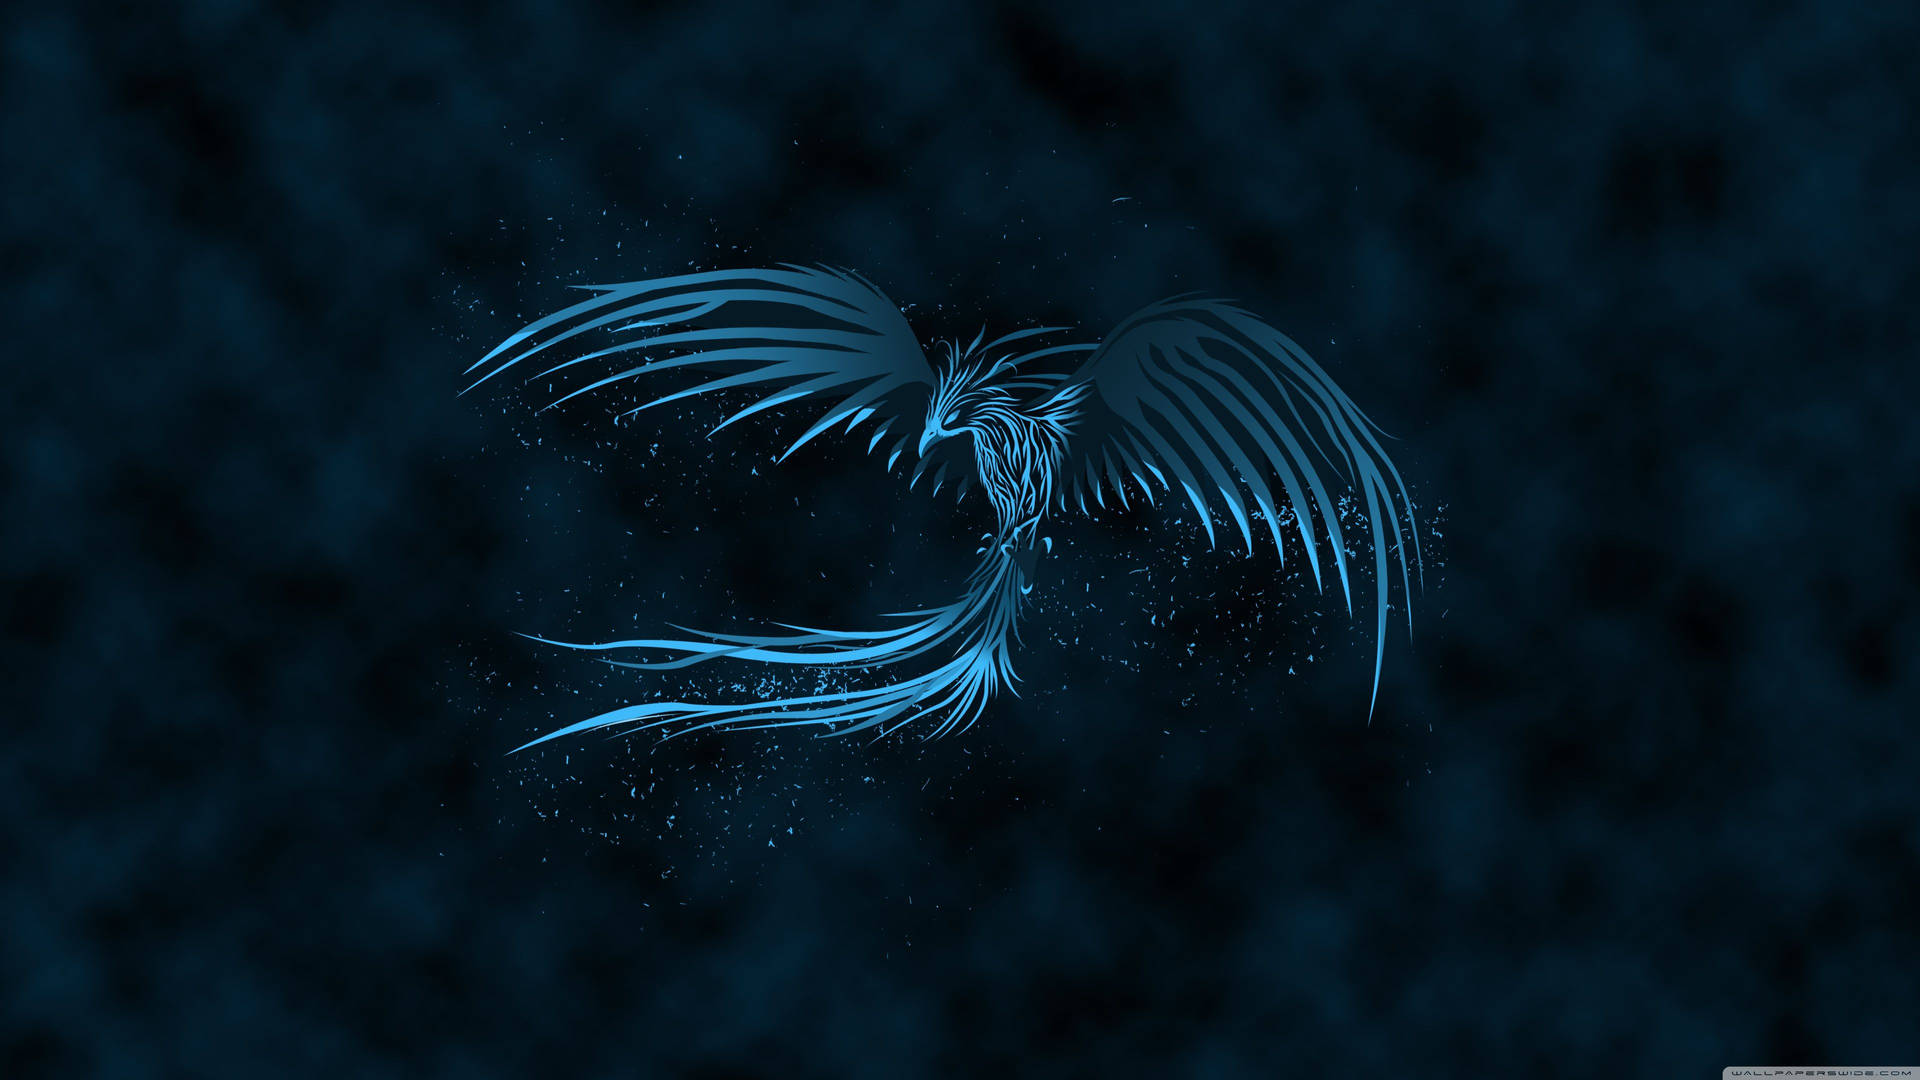 The Blue Phoenix of Phoenix Wallpaper